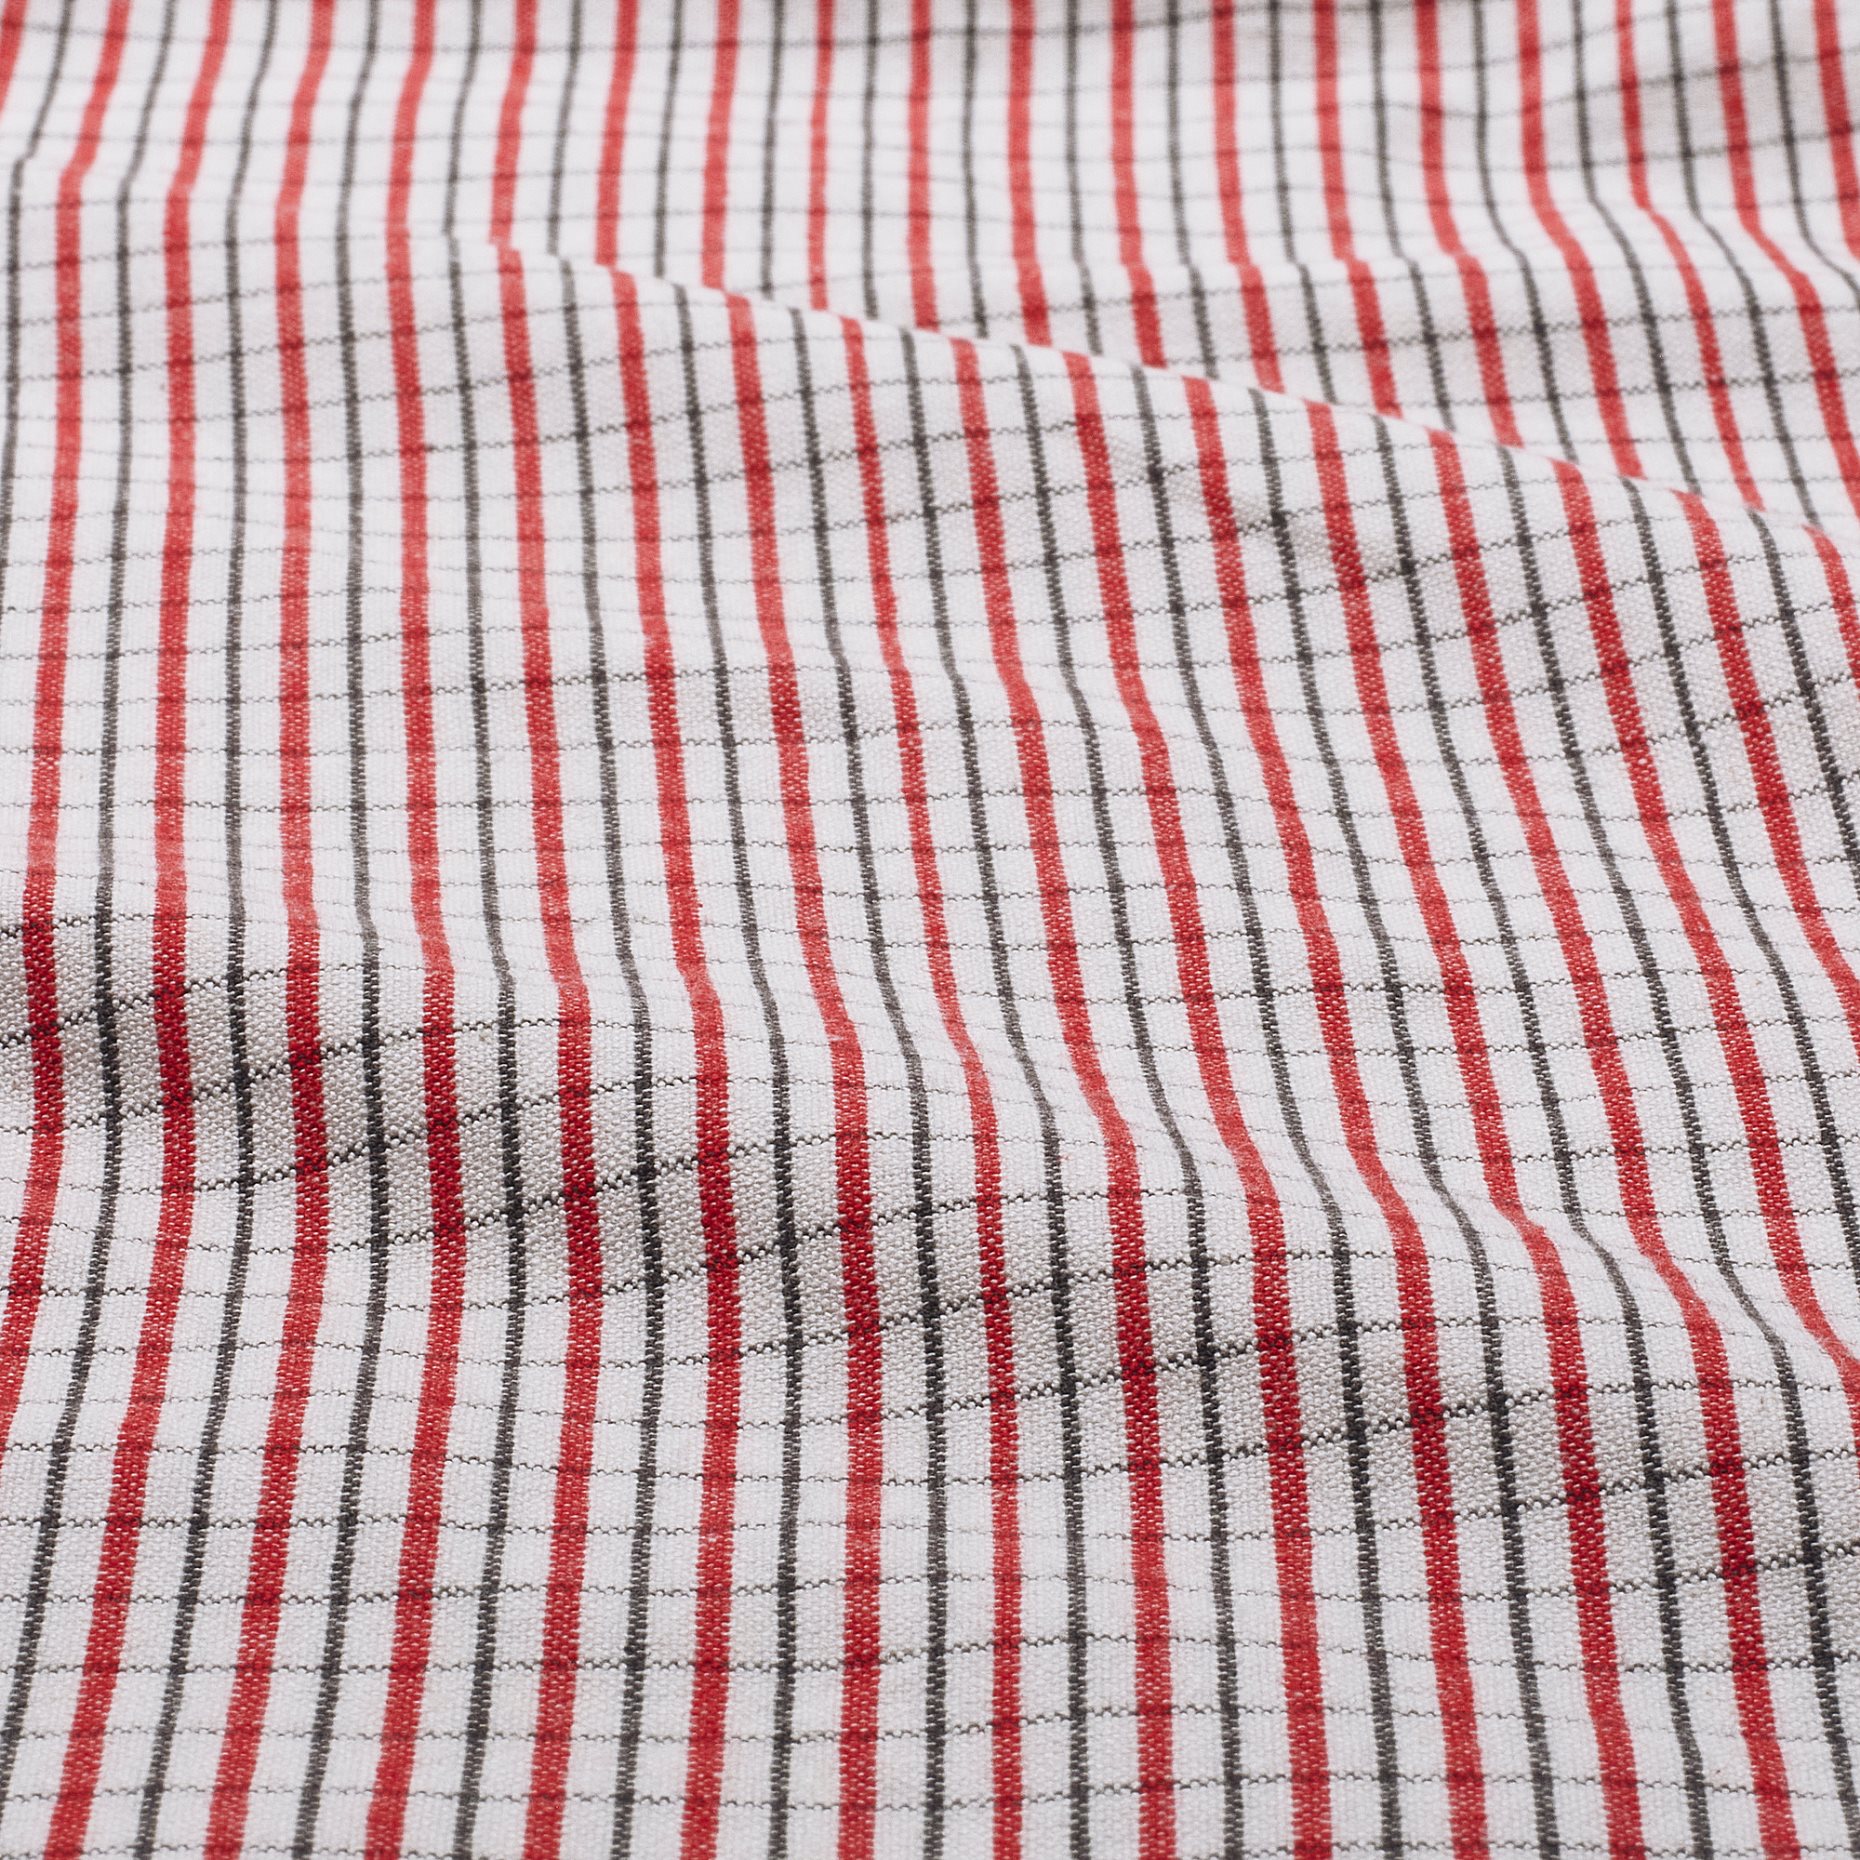 VINTERFINT, tea towel mixed patterns/2 pack, 50x70 cm, 605.561.24